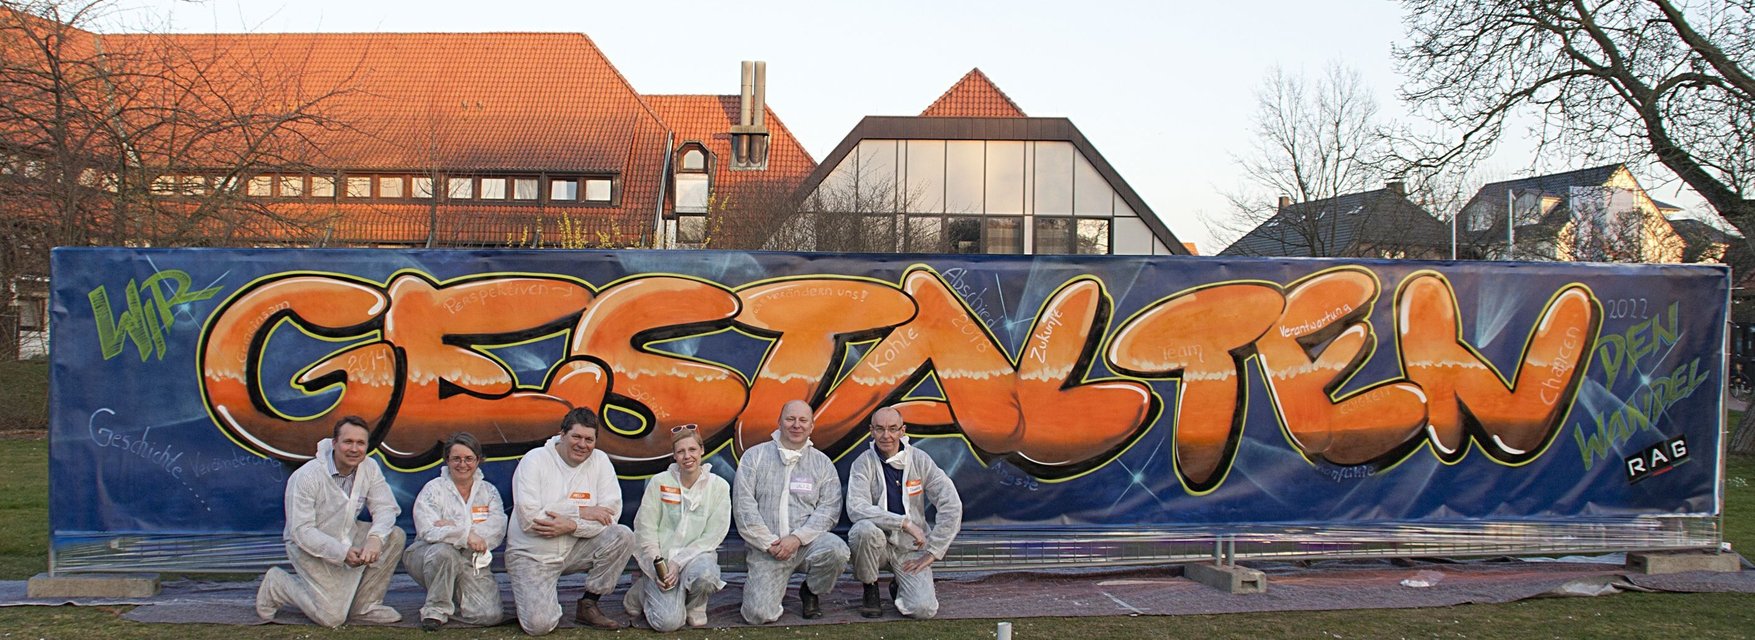 Teamevent Graffiti Workshop